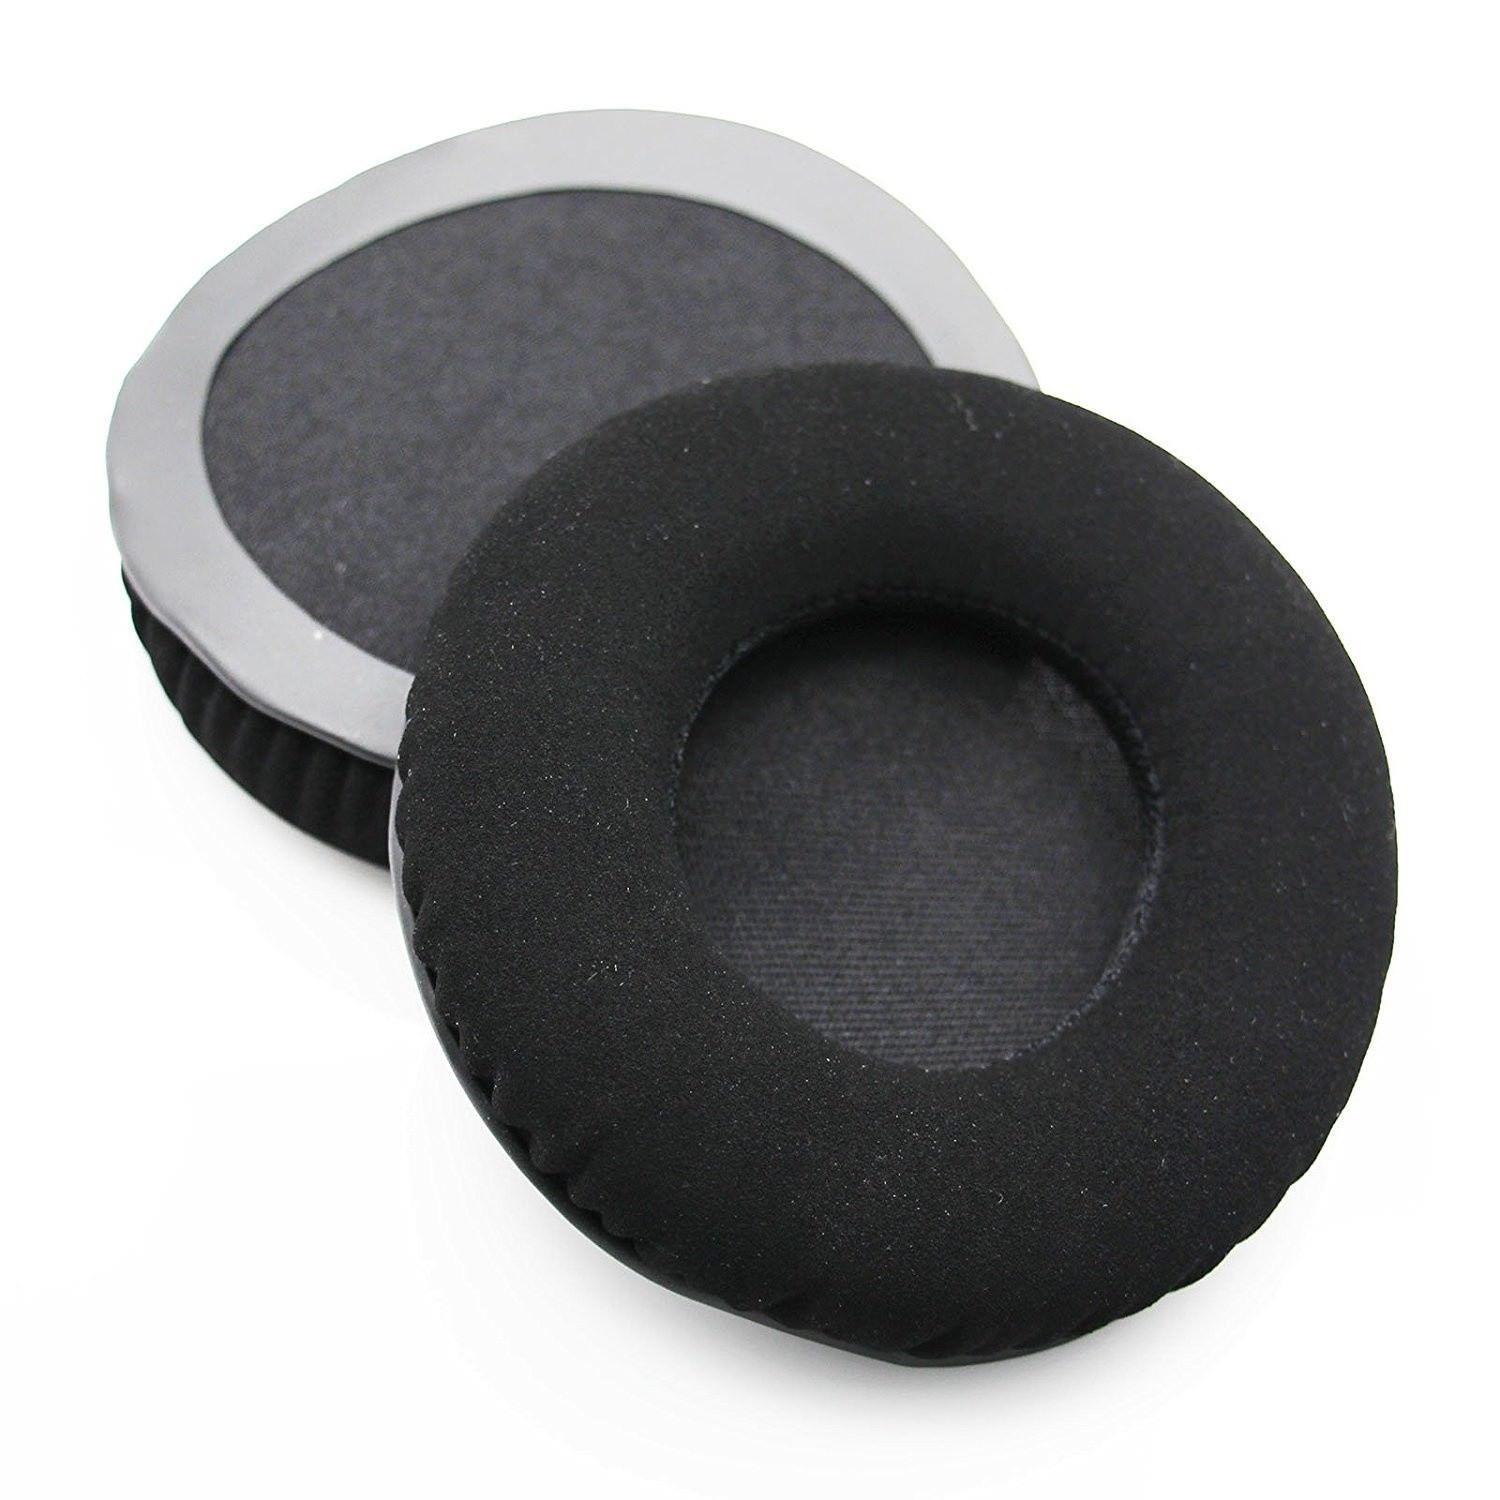 Replacement Ear Pad Cover Cushion for Sennheiser Urbanite XL Over-Ear Headphone